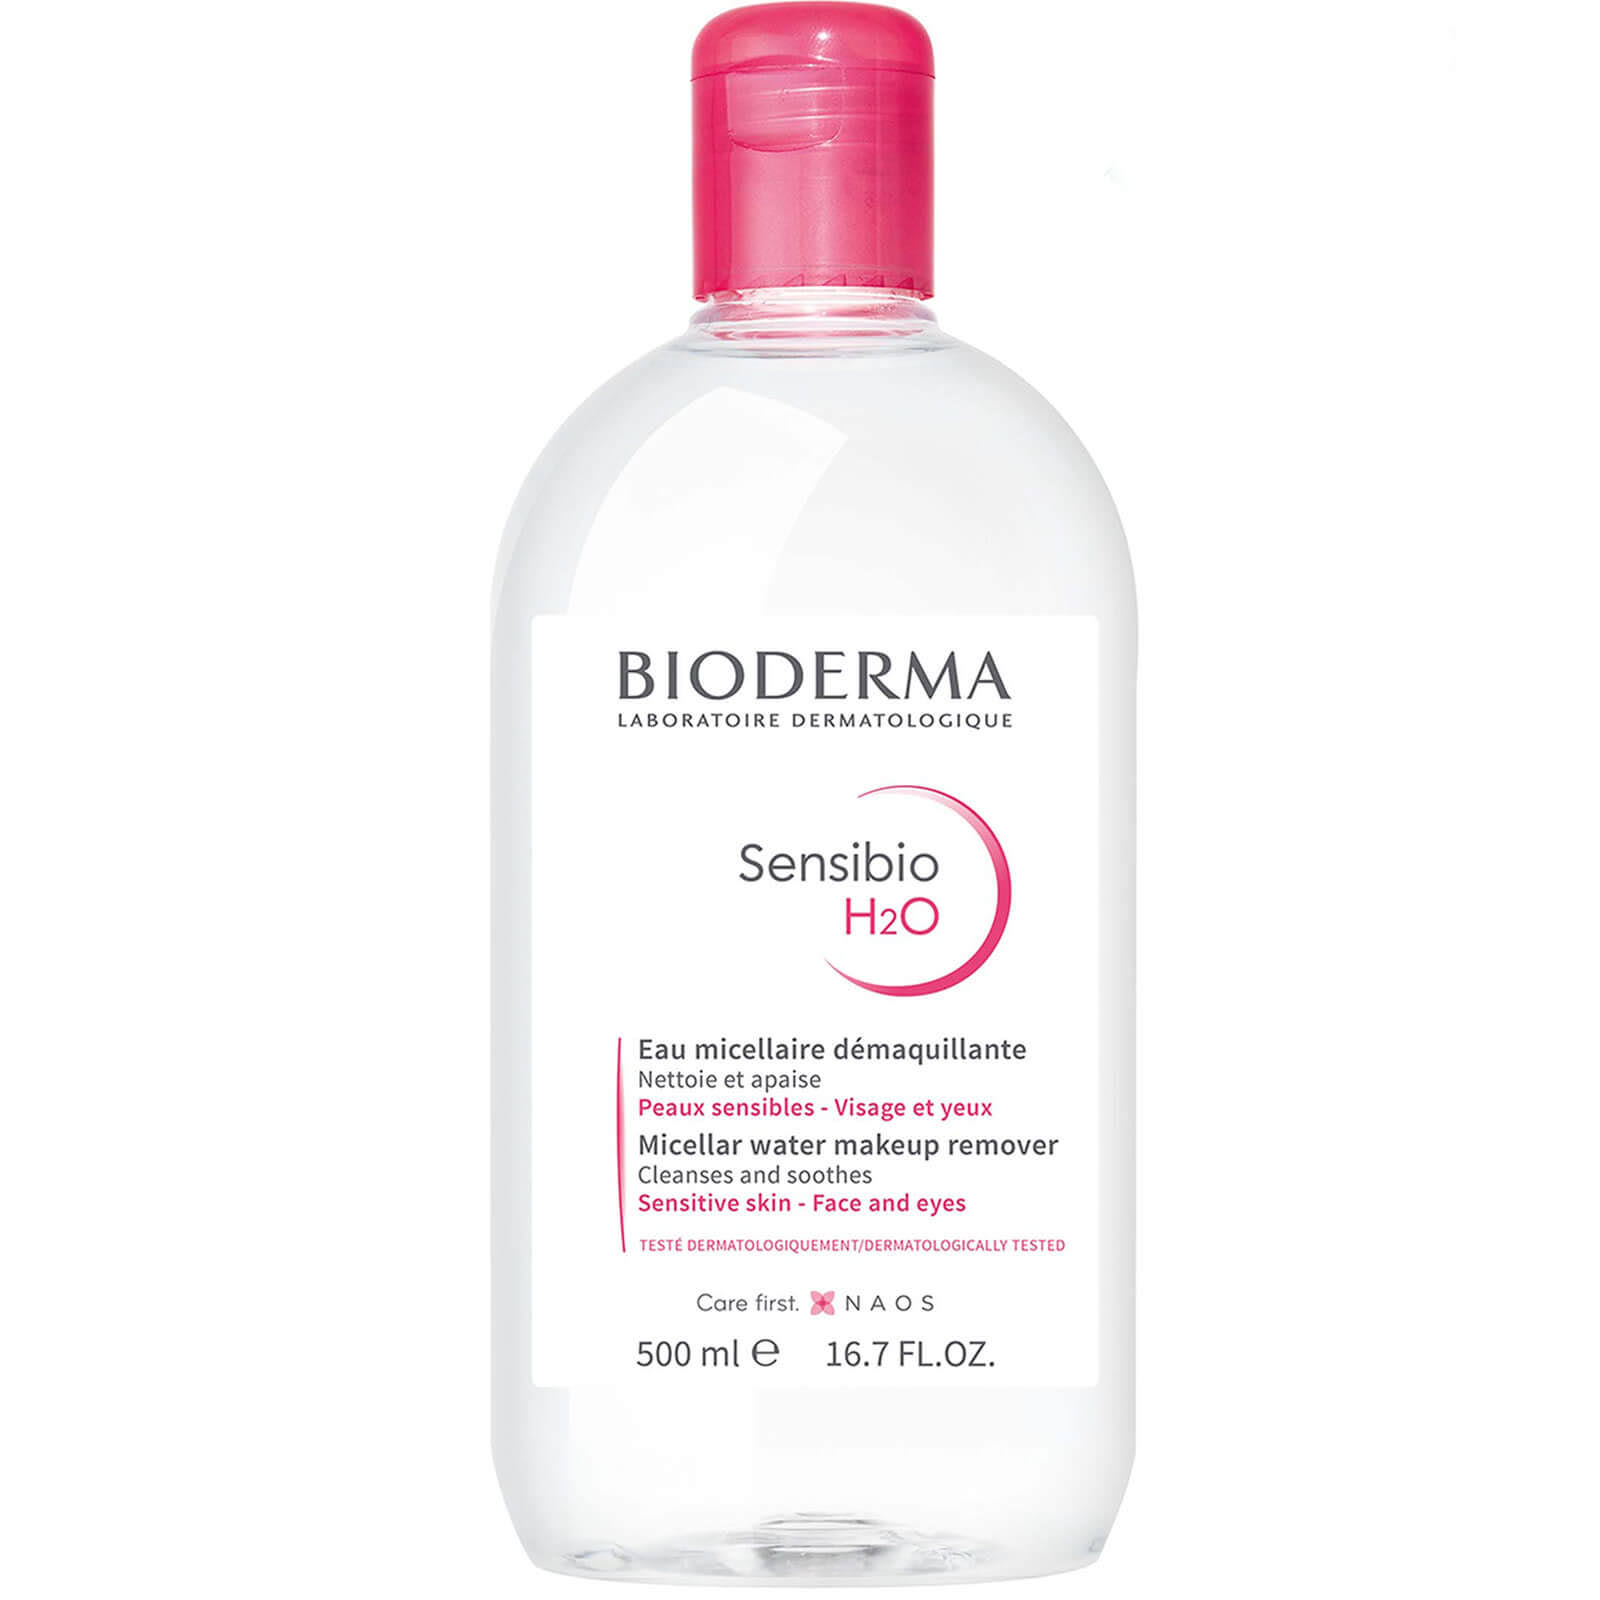 Bioderma Sensibio H2O Micelle Solution - 500ml